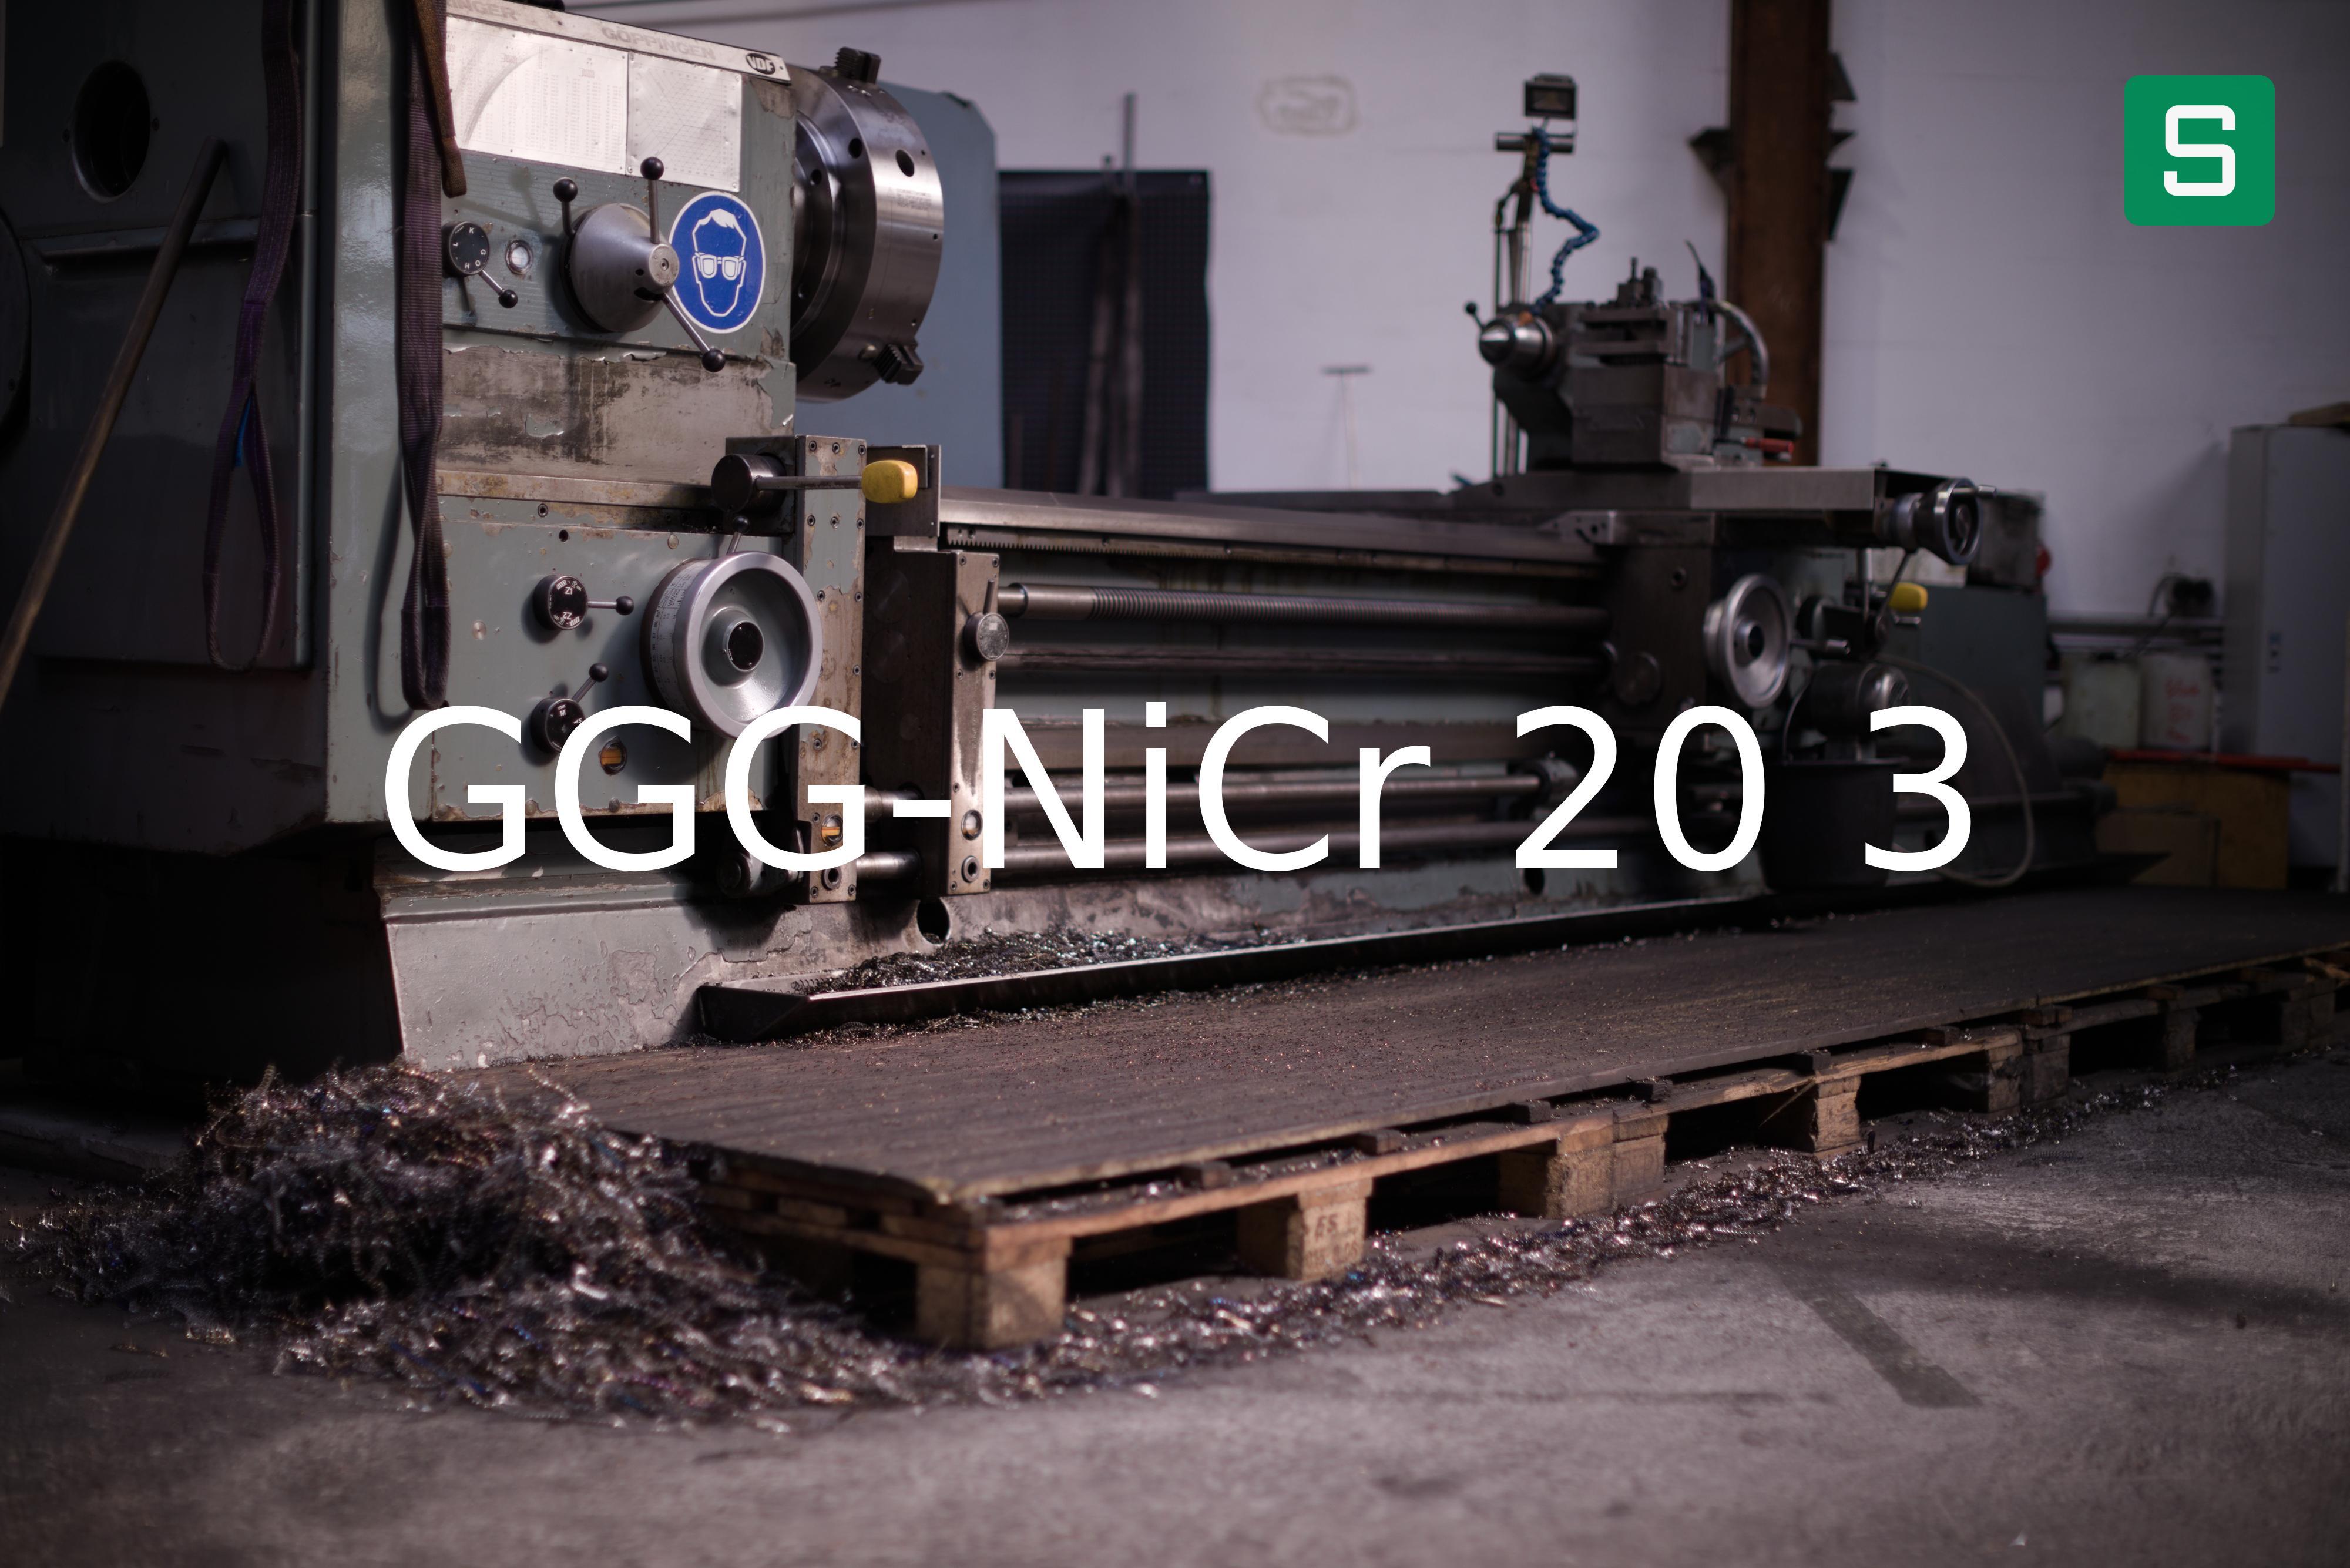 Steel Material: GGG-NiCr 20 3